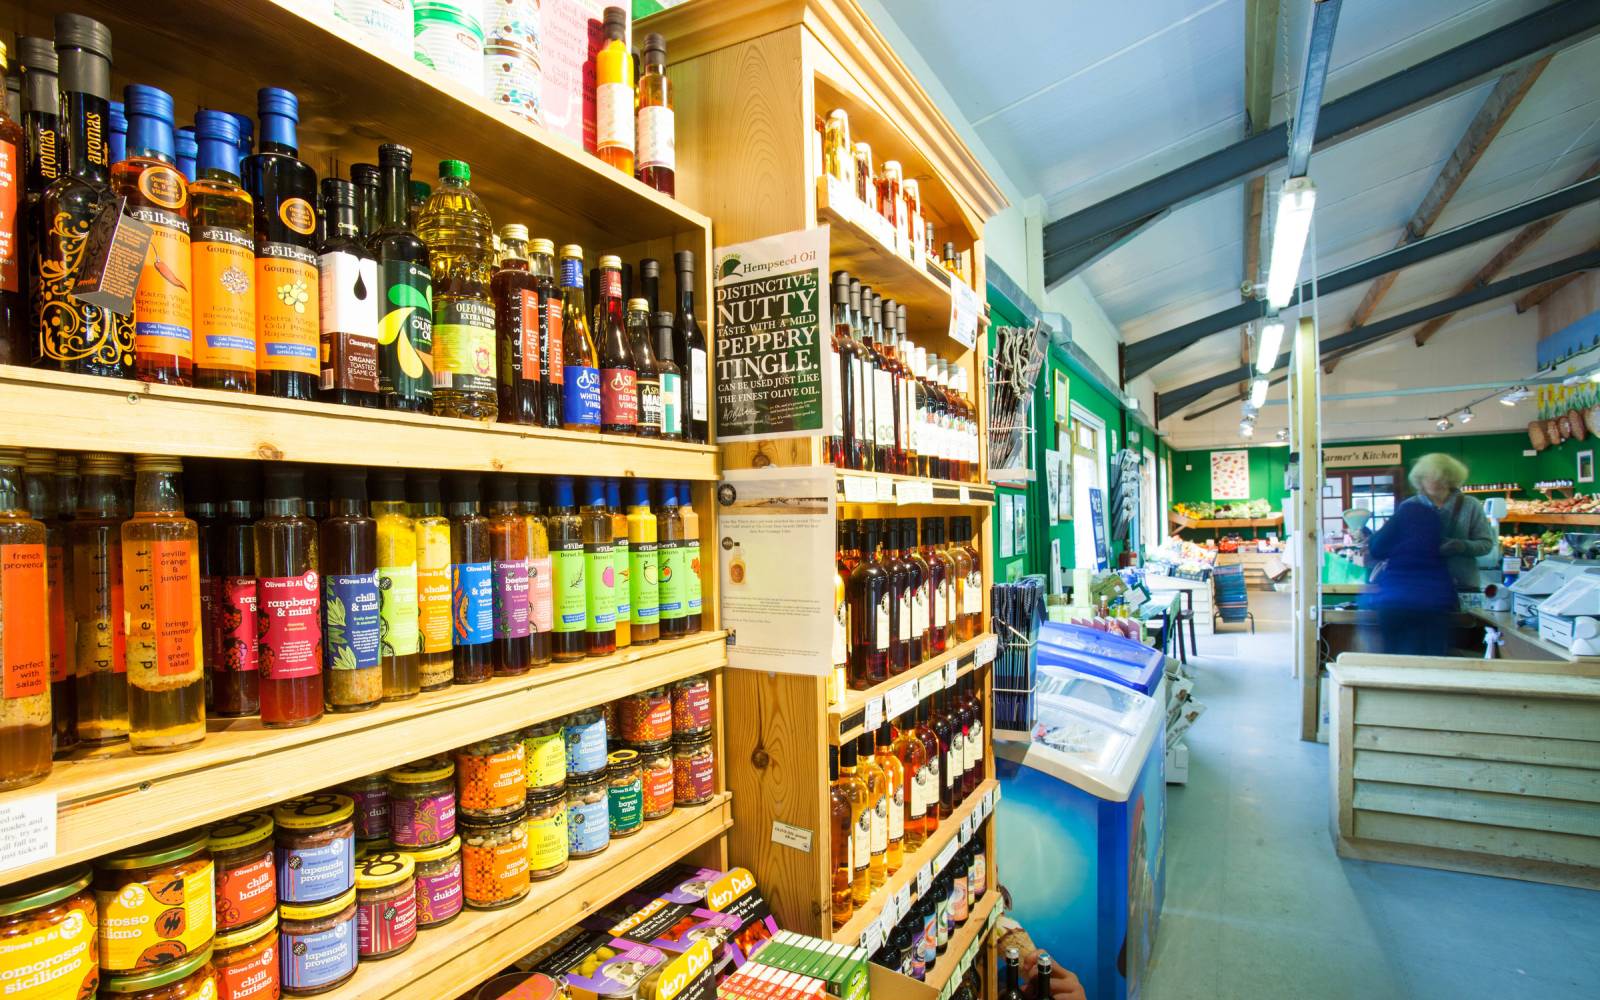 Gesell un magasin d'aliments naturels dans le sud de l'Angleterre